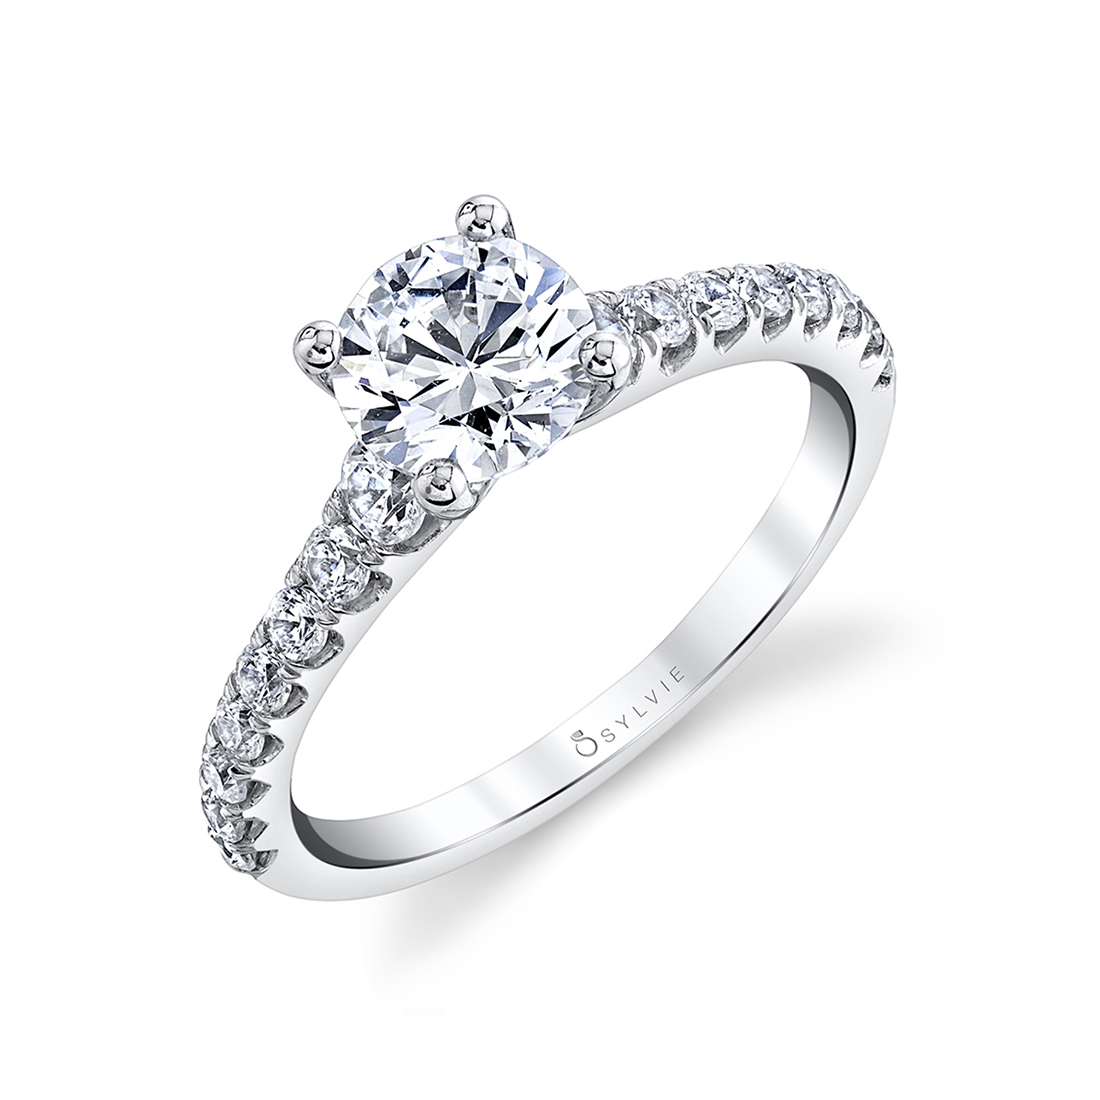 Classic Engagement Ring - Jordane Stuart Benjamin & Co. Jewelry Designs San Diego, CA